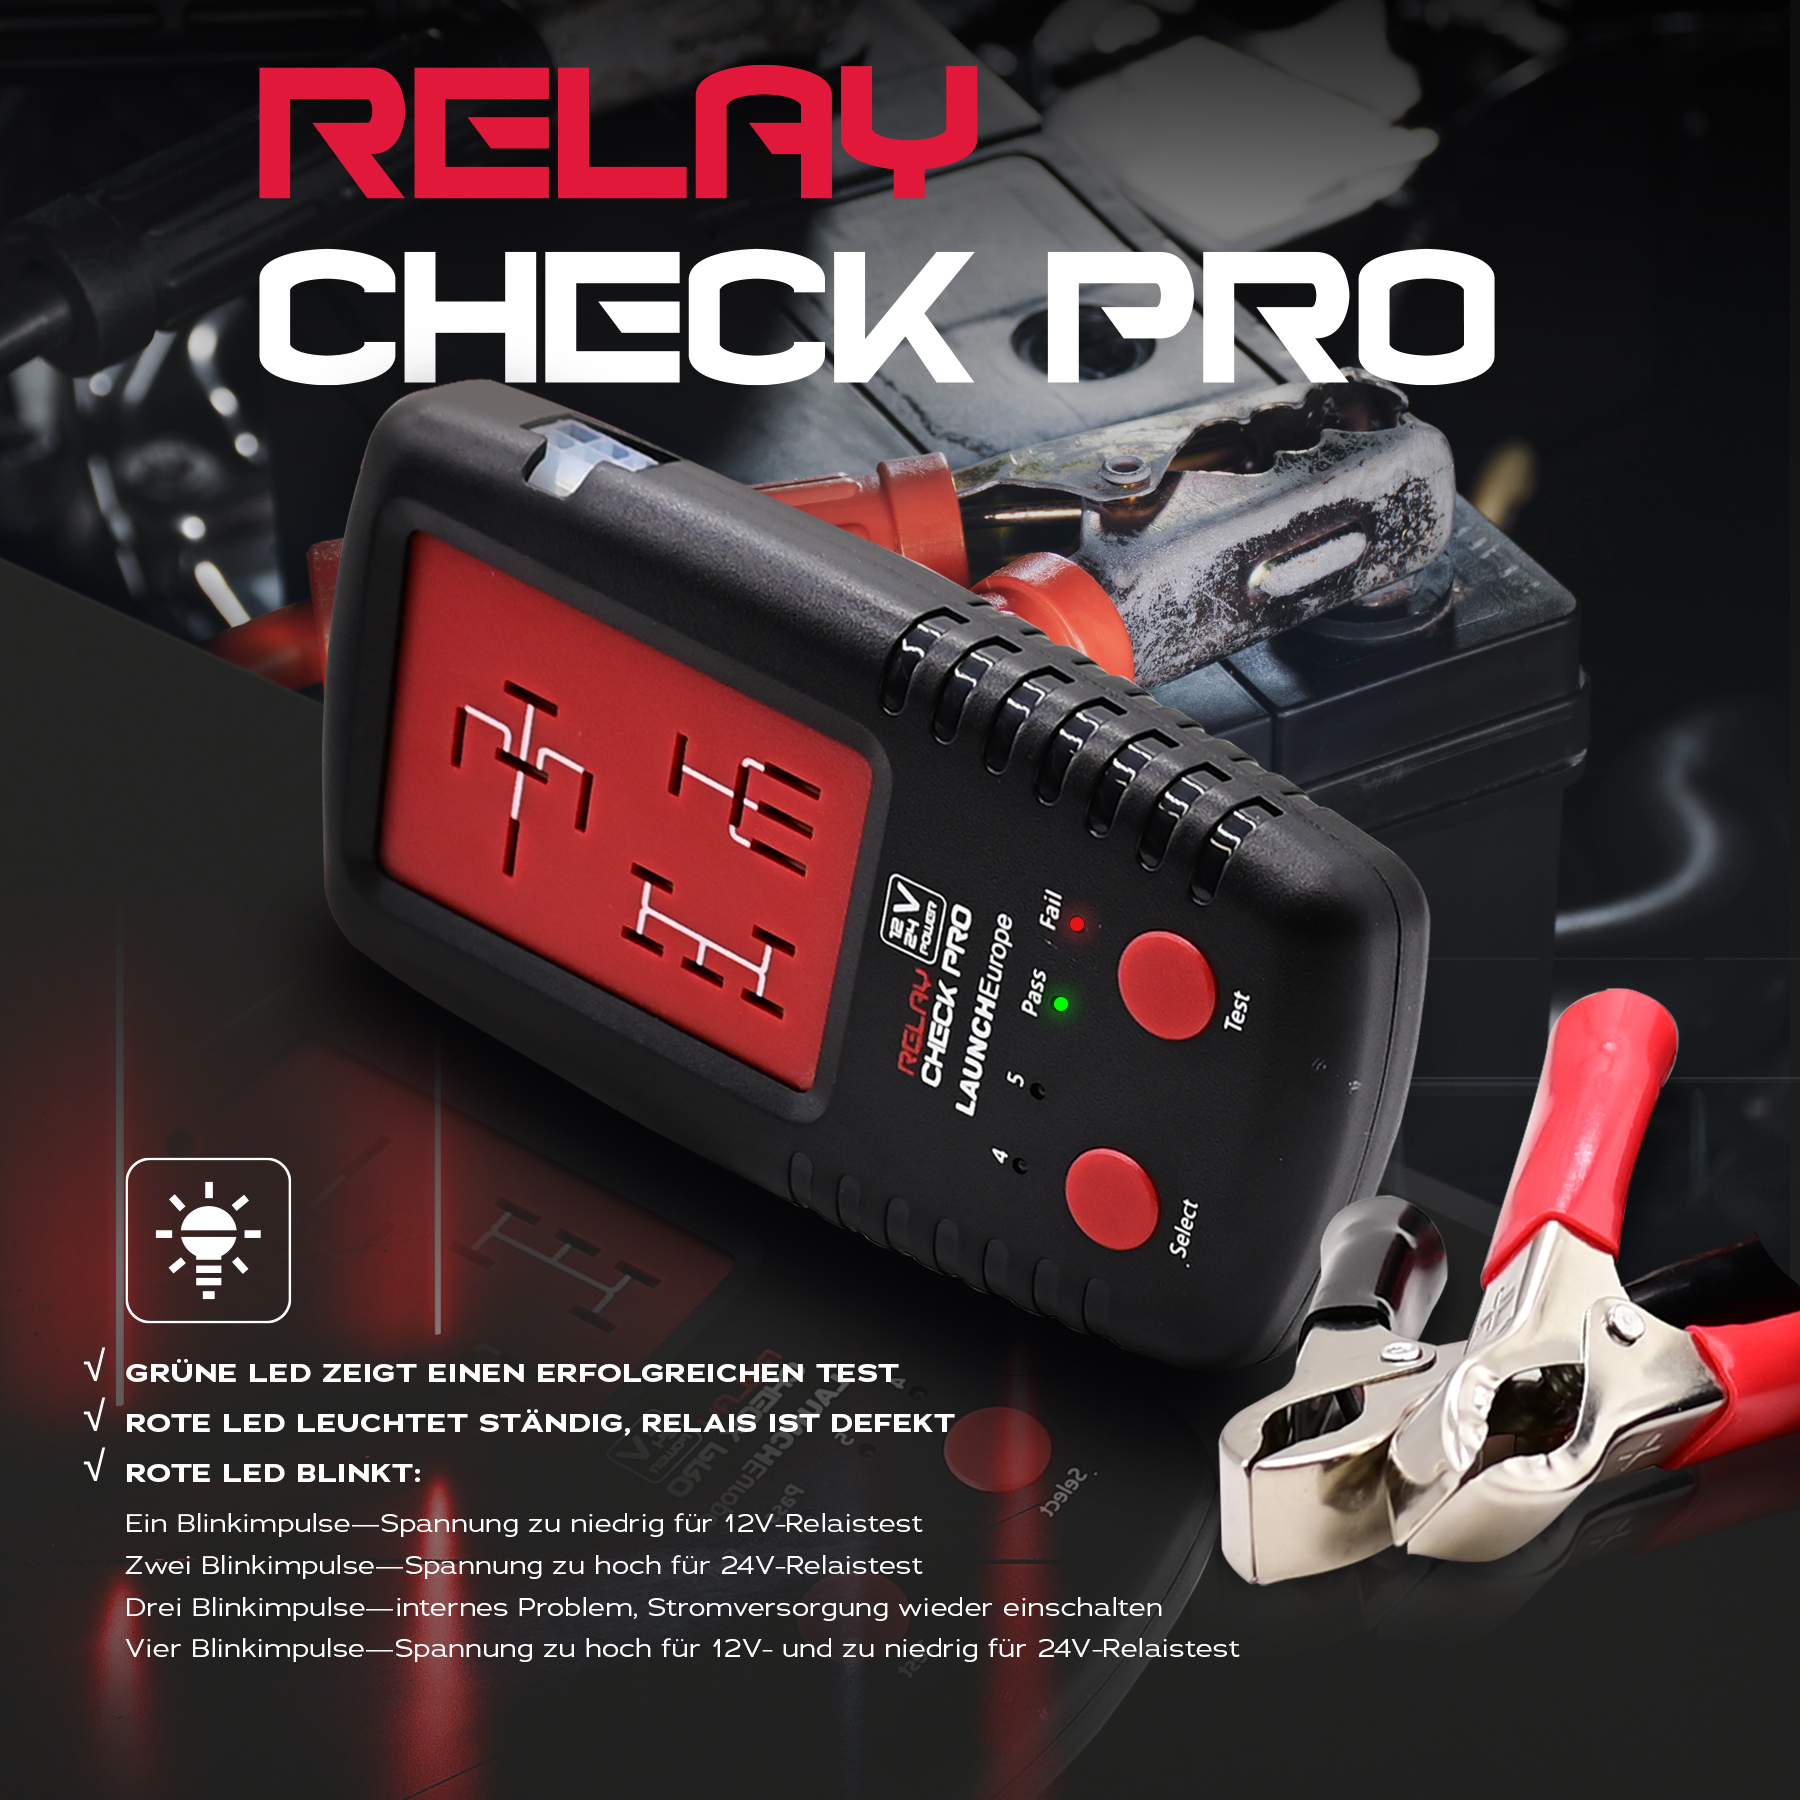  RelayCheck Pro